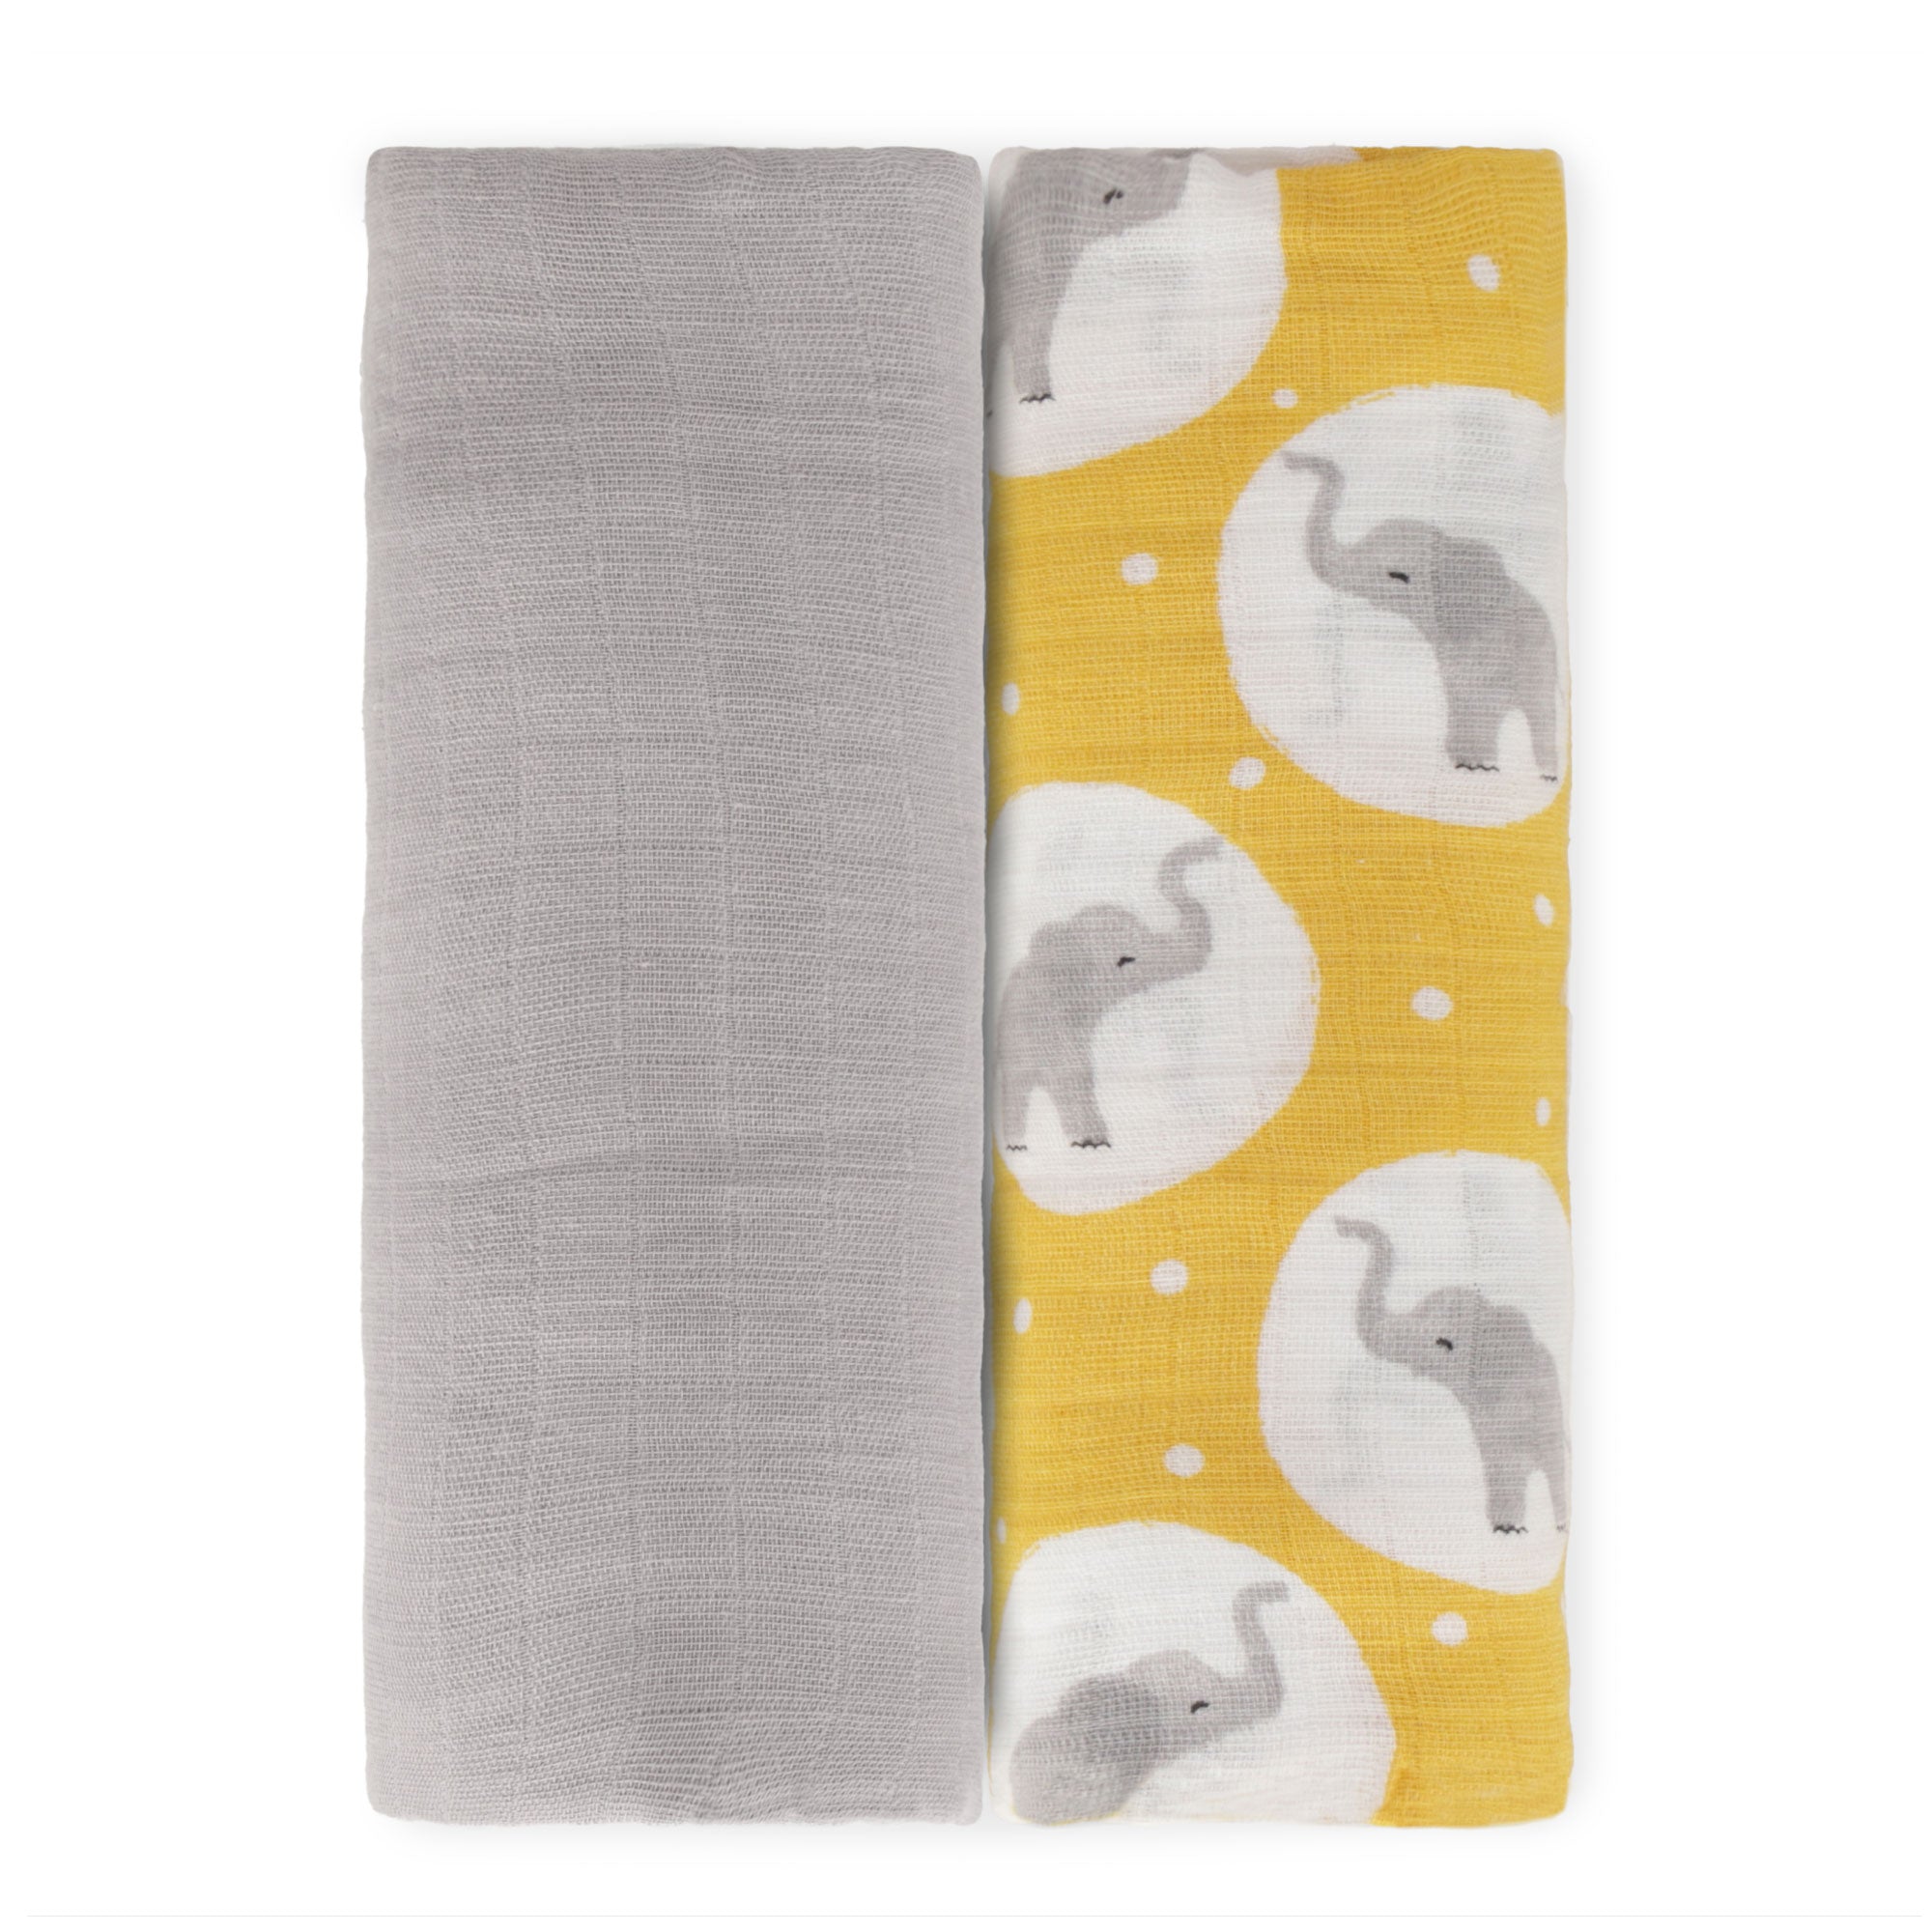 FH-07055 - 2PK Muslin Swaddle Blanket 47" x 47" - Elephant & Quiet Grey